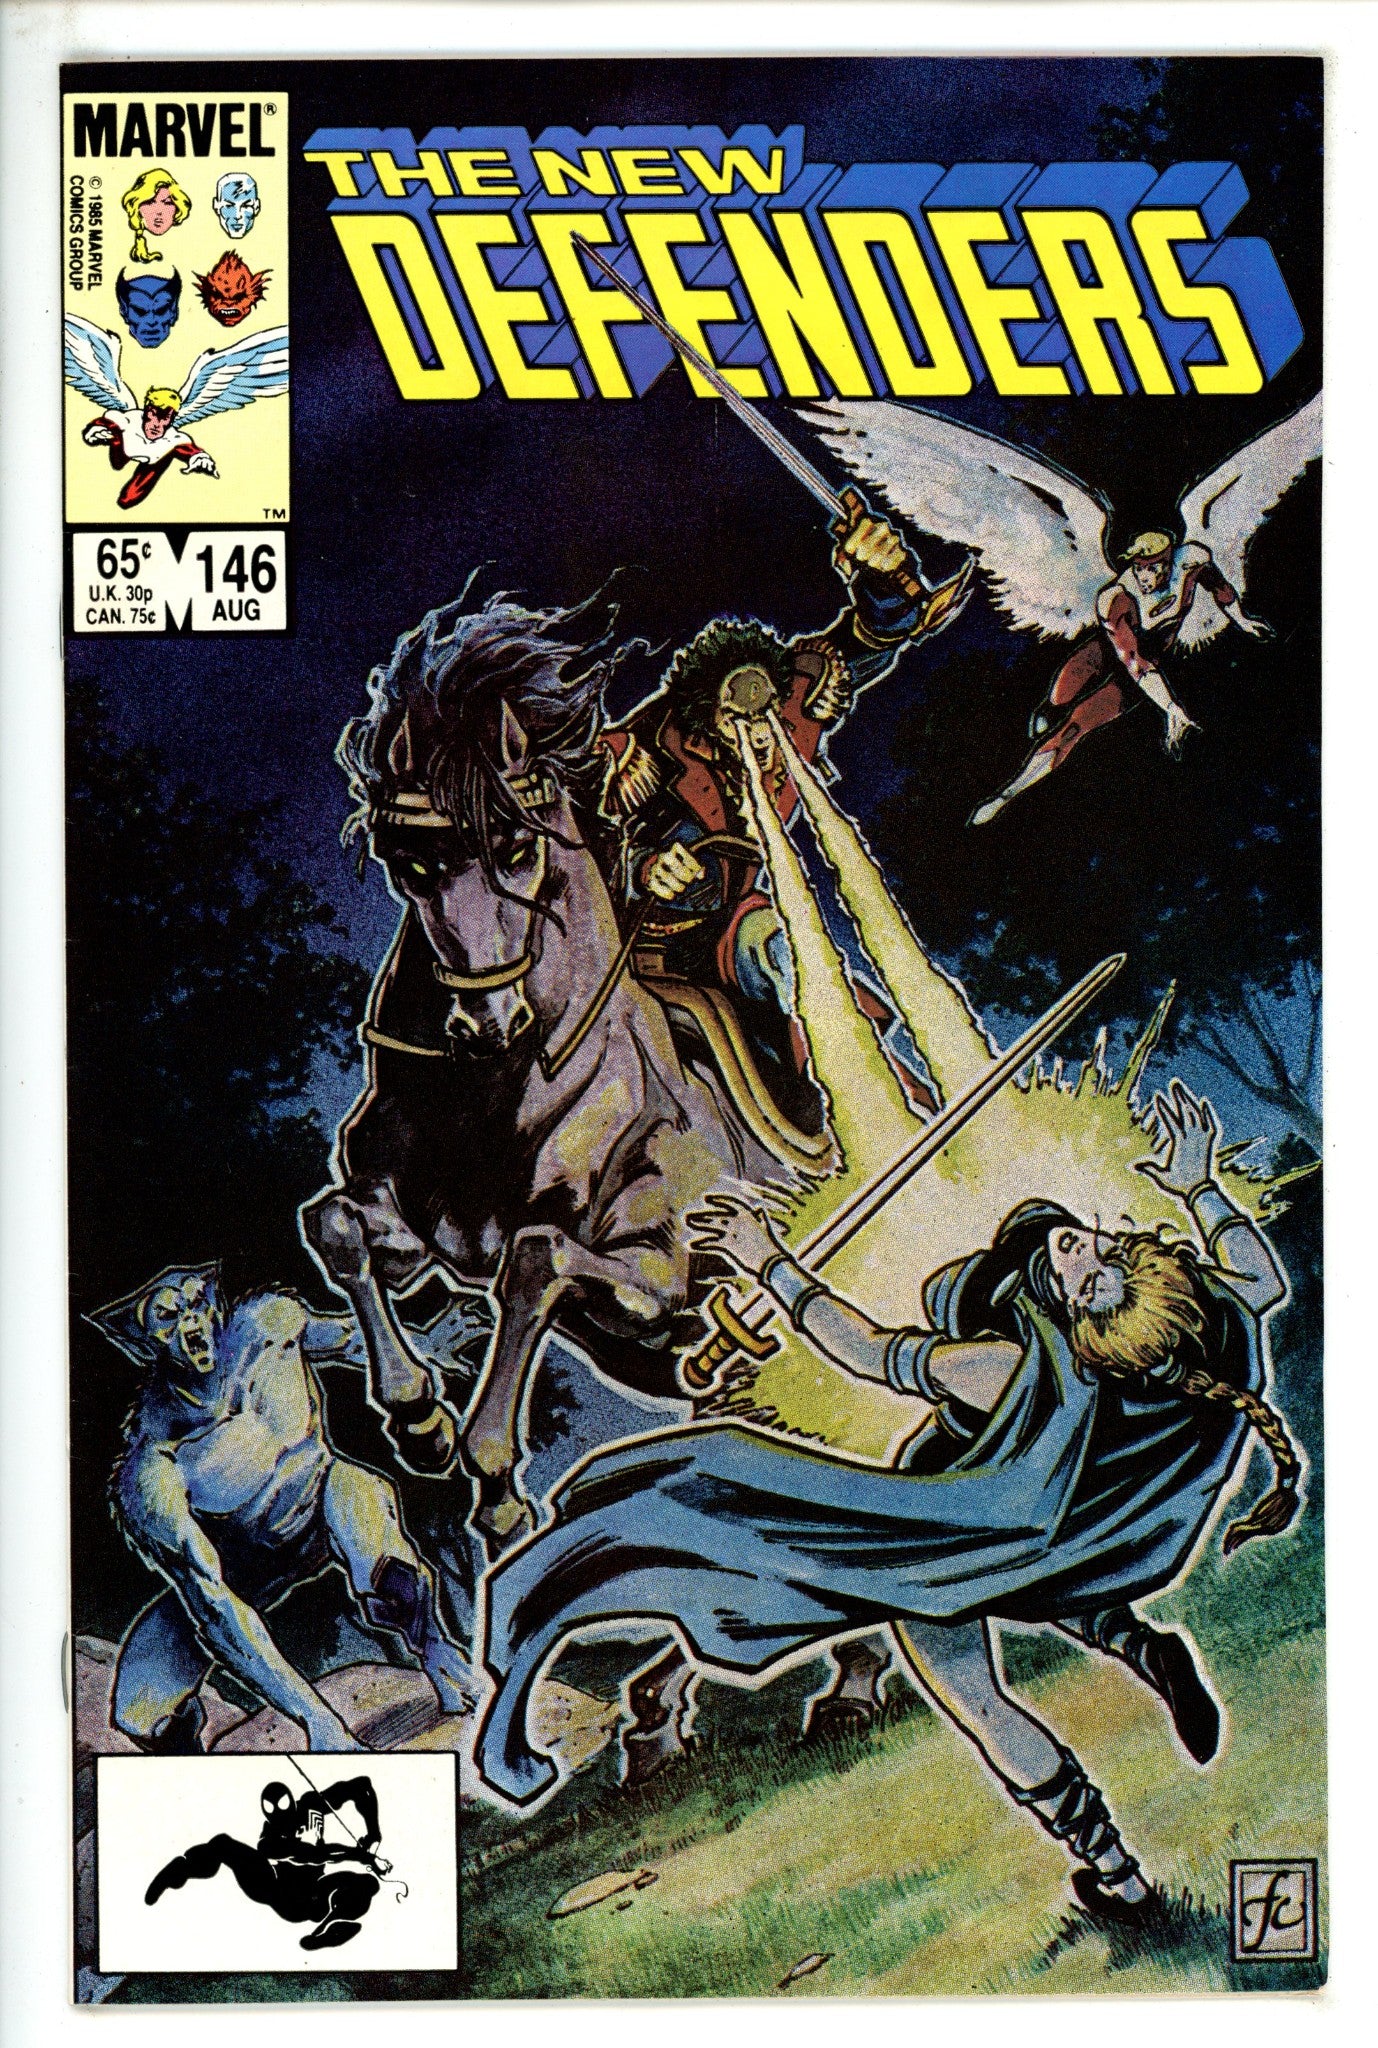 The Defenders Vol 1 146 (1985)